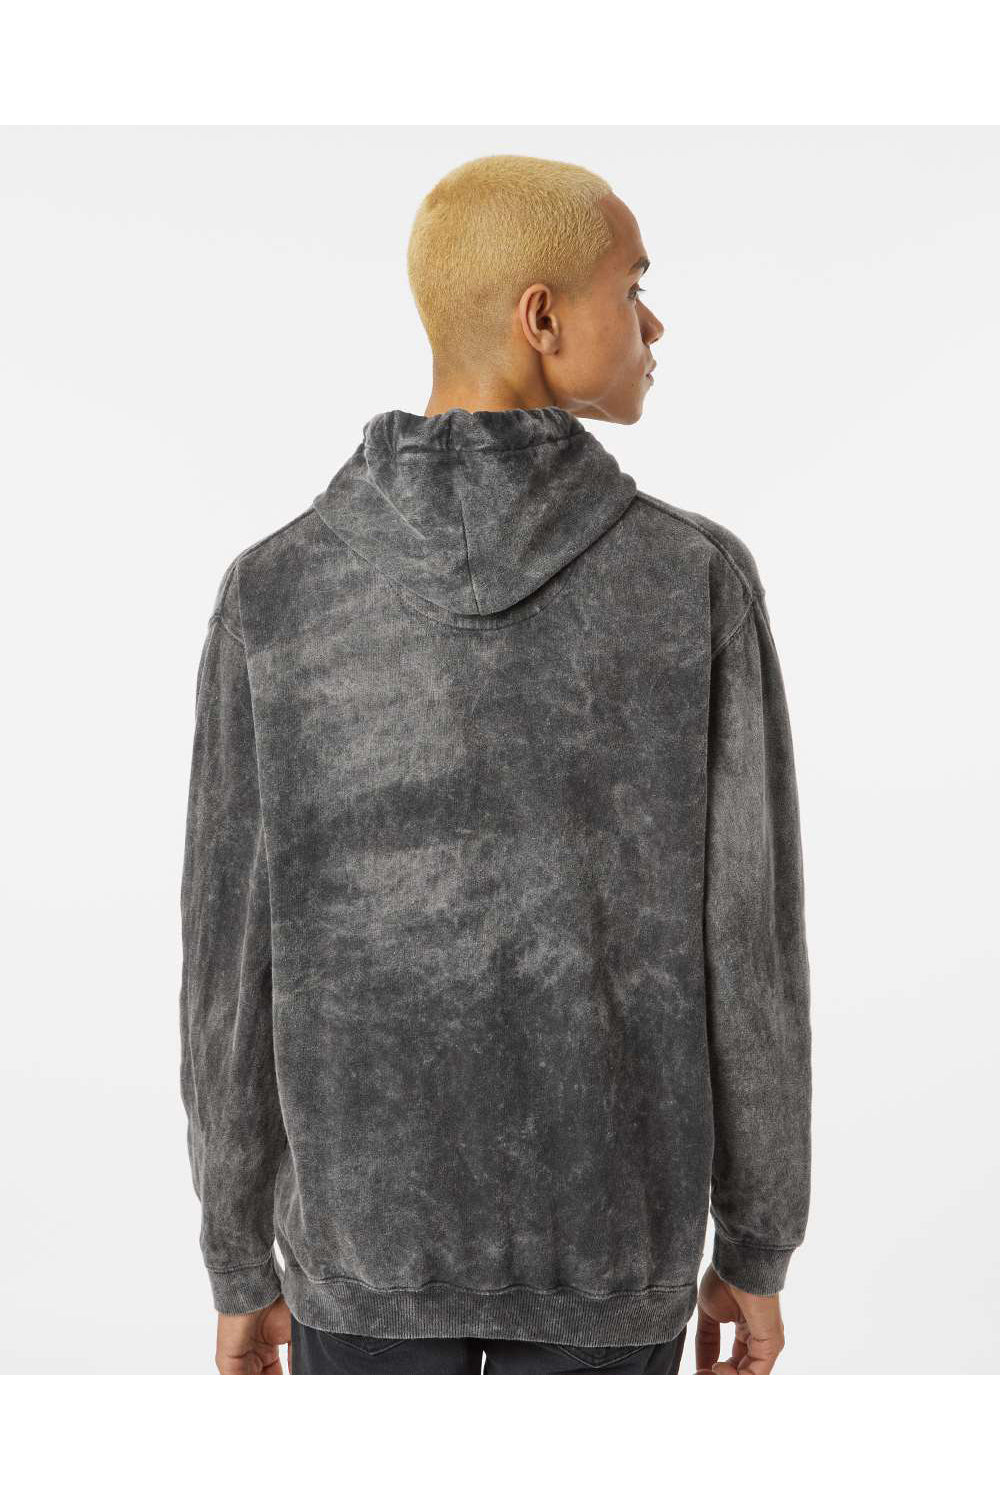 Dyenomite 854MW Mens Premium Fleece Mineral Wash Hooded Sweatshirt Hoodie Grey Mineral Wash Model Back